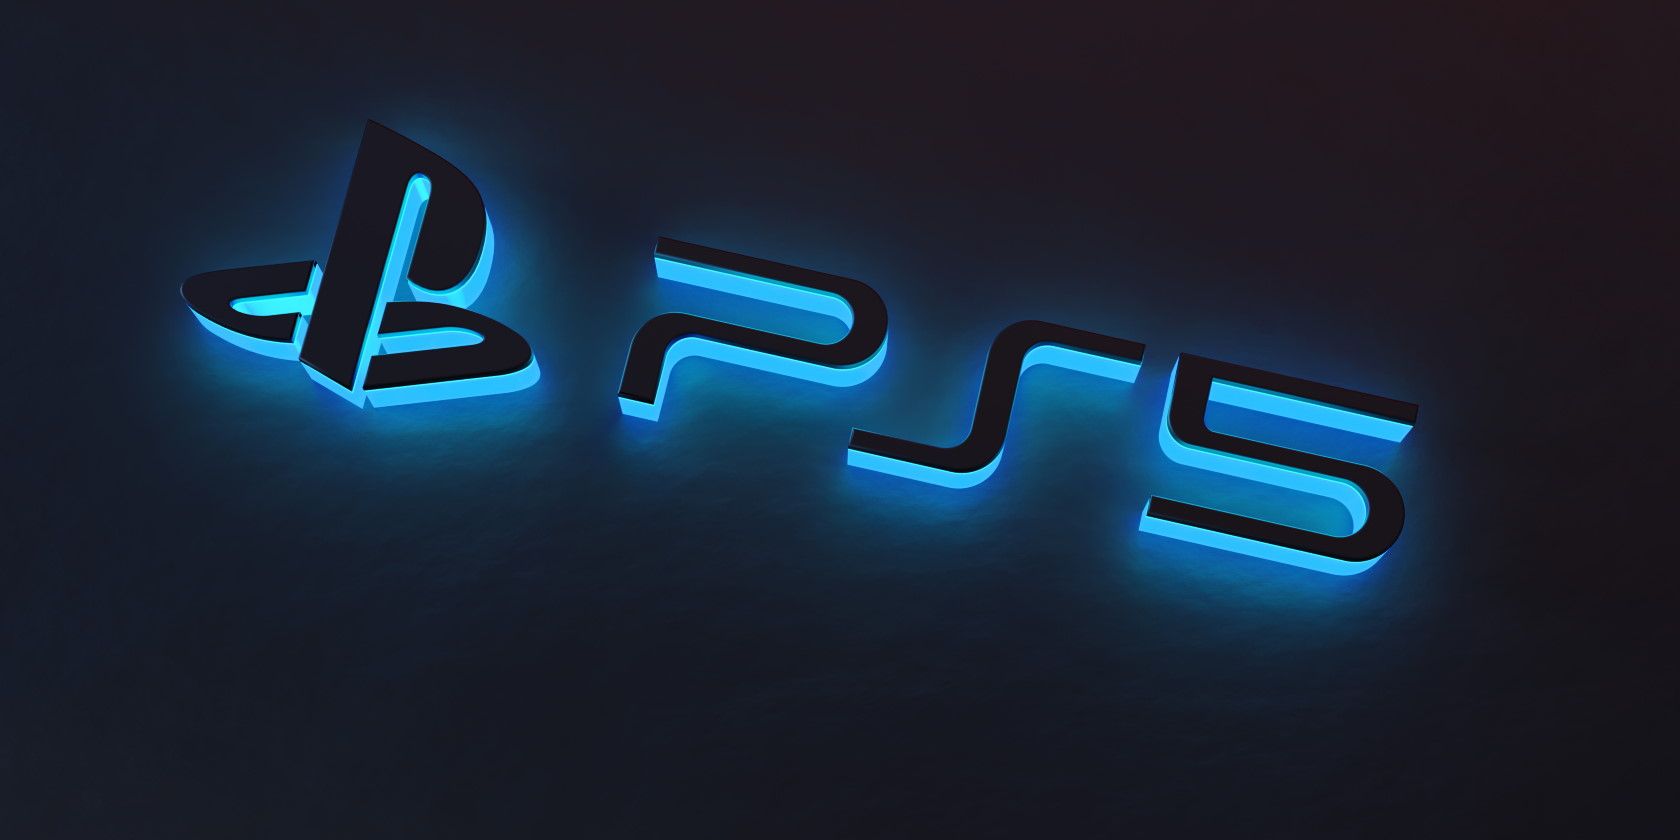 PS5 logo in blue lights